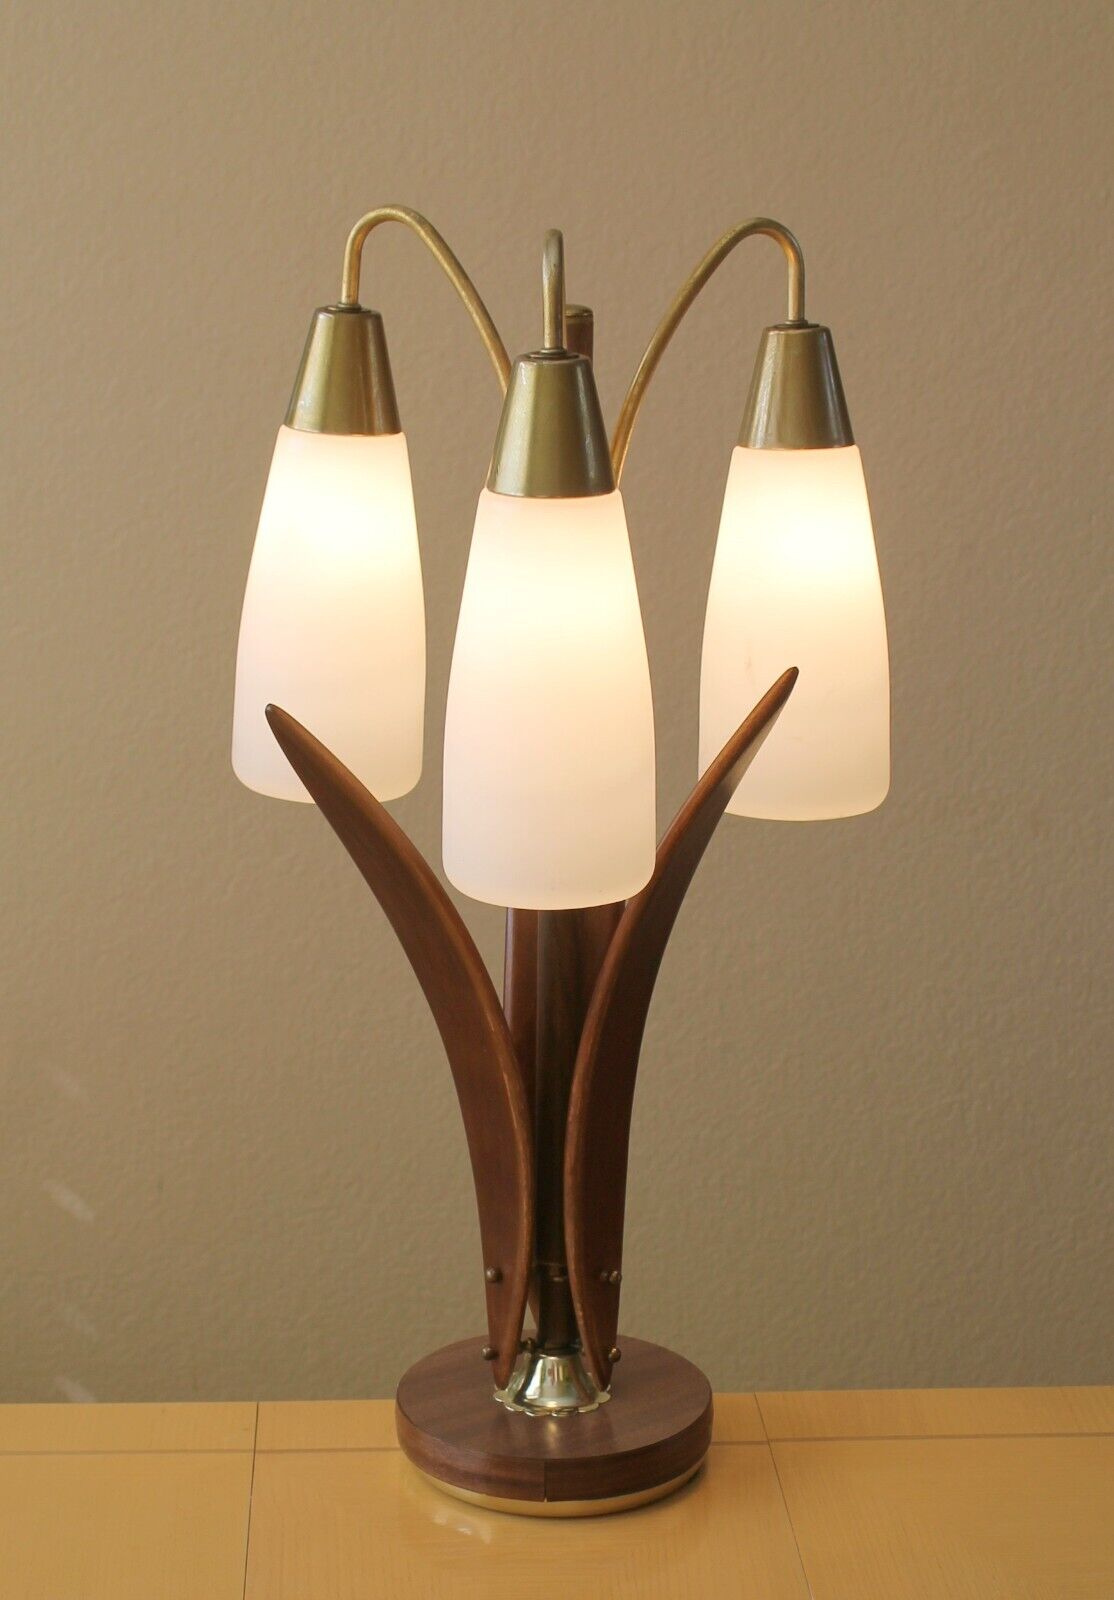 Exquisite Danish Modern 3 Shade Glass and Walnut Lamp 1950s Mid Century MCM Wood